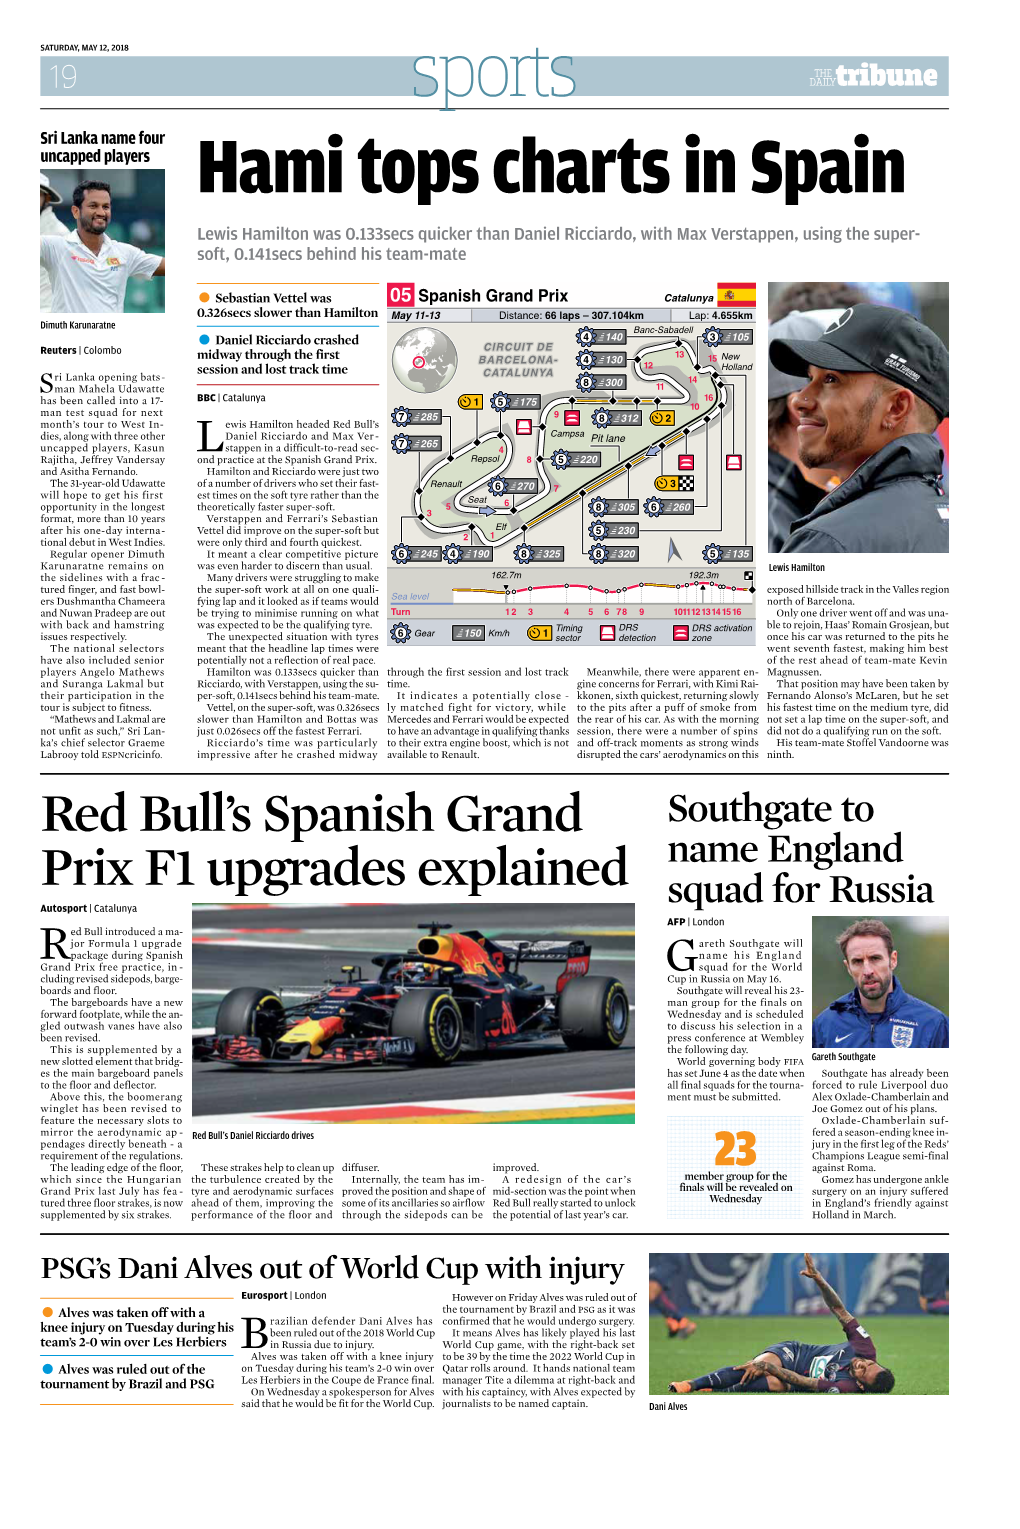 Red Bull's Spanish Grand Prix F1 Upgrades Explained